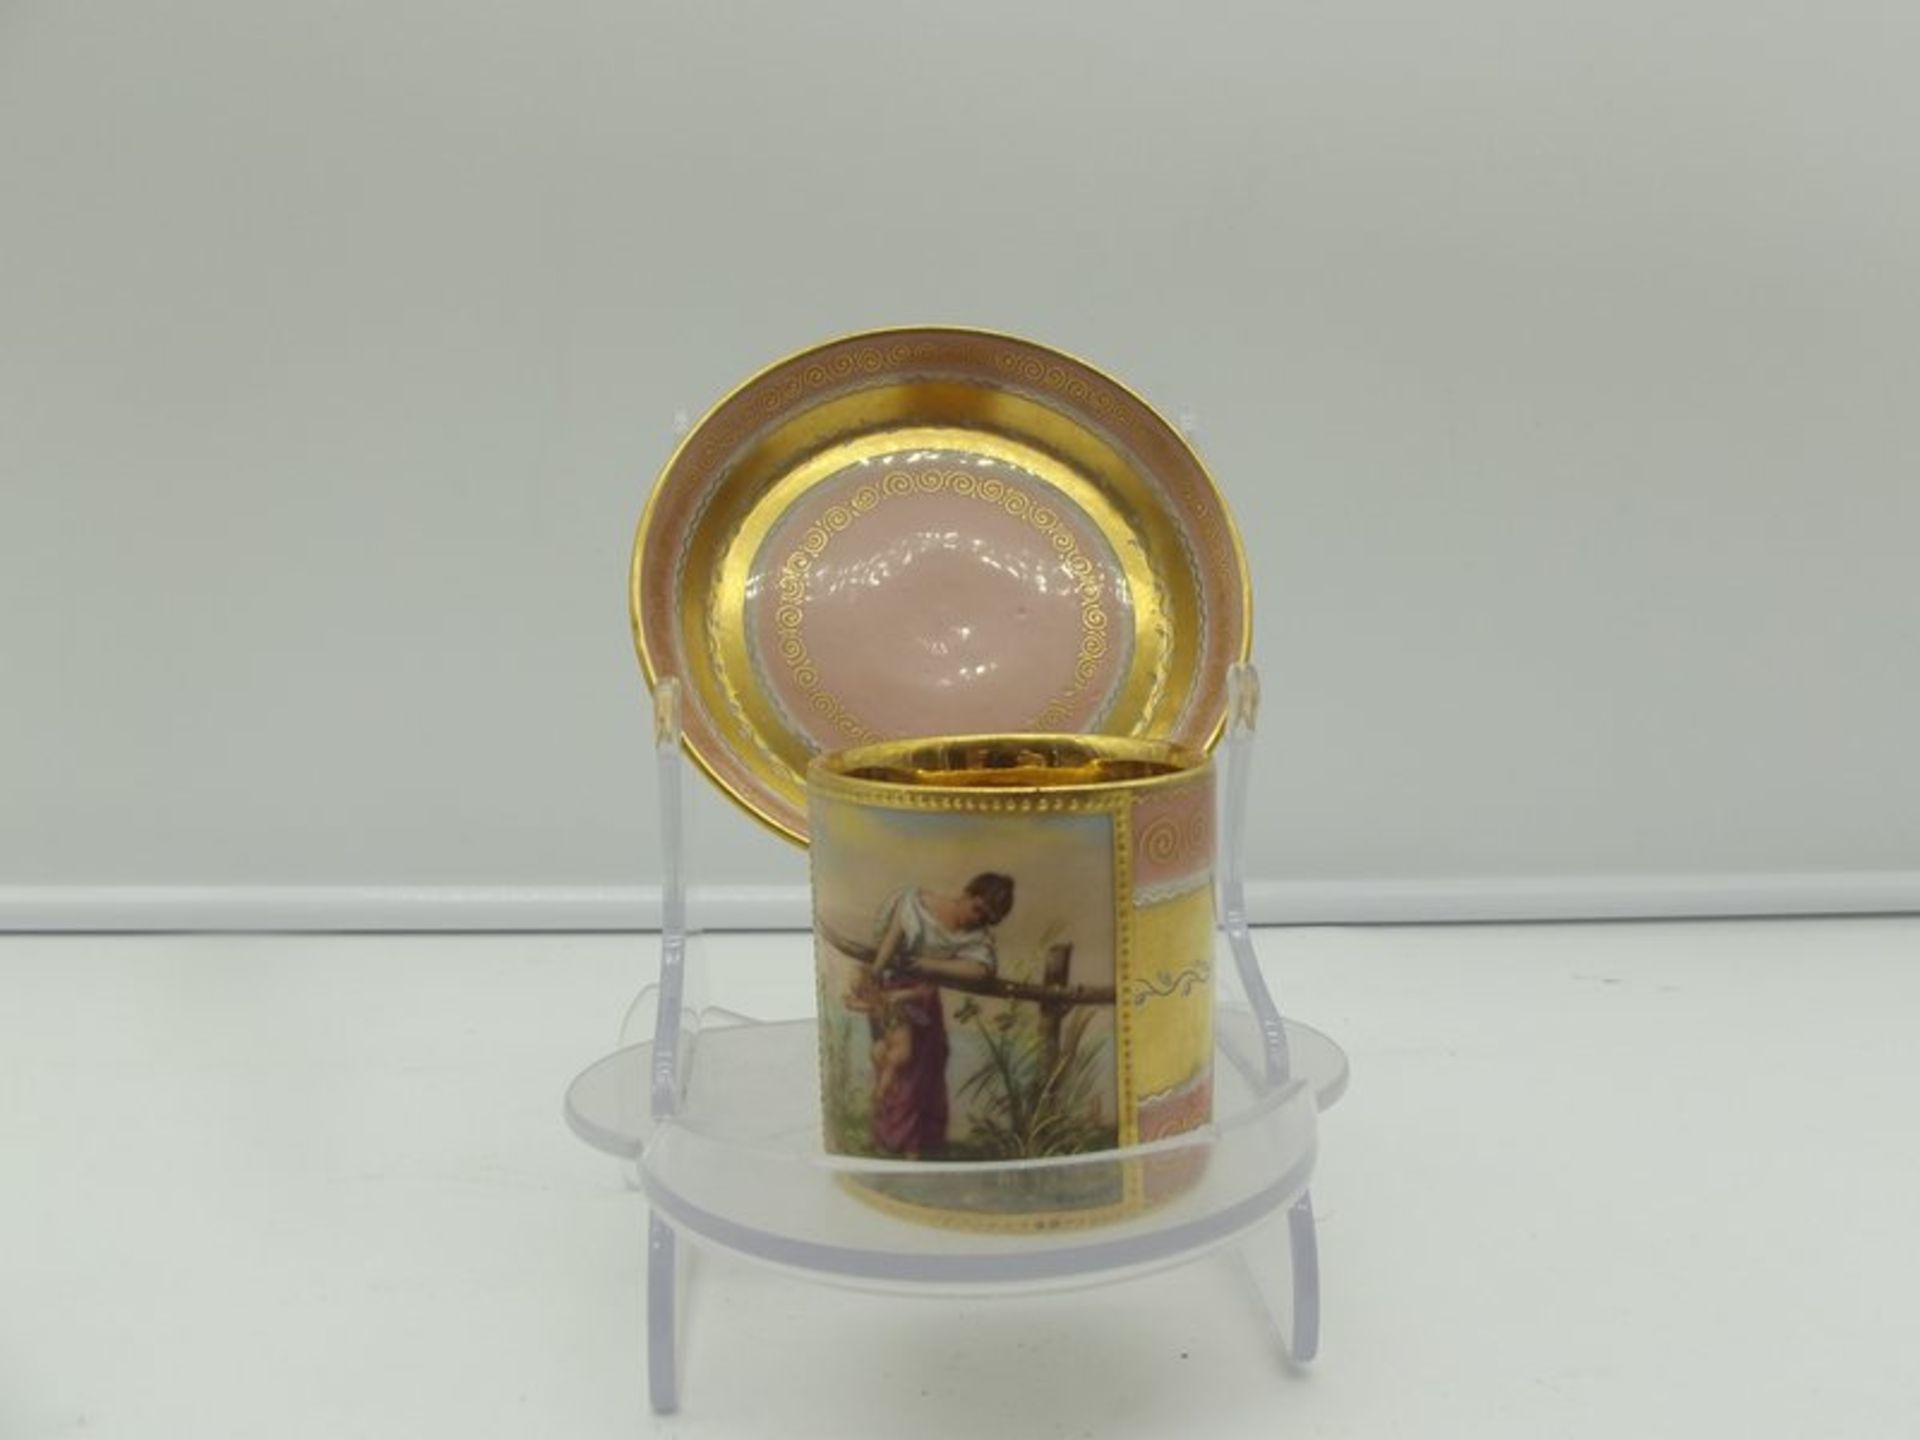 19th century Vienna porcelain cup